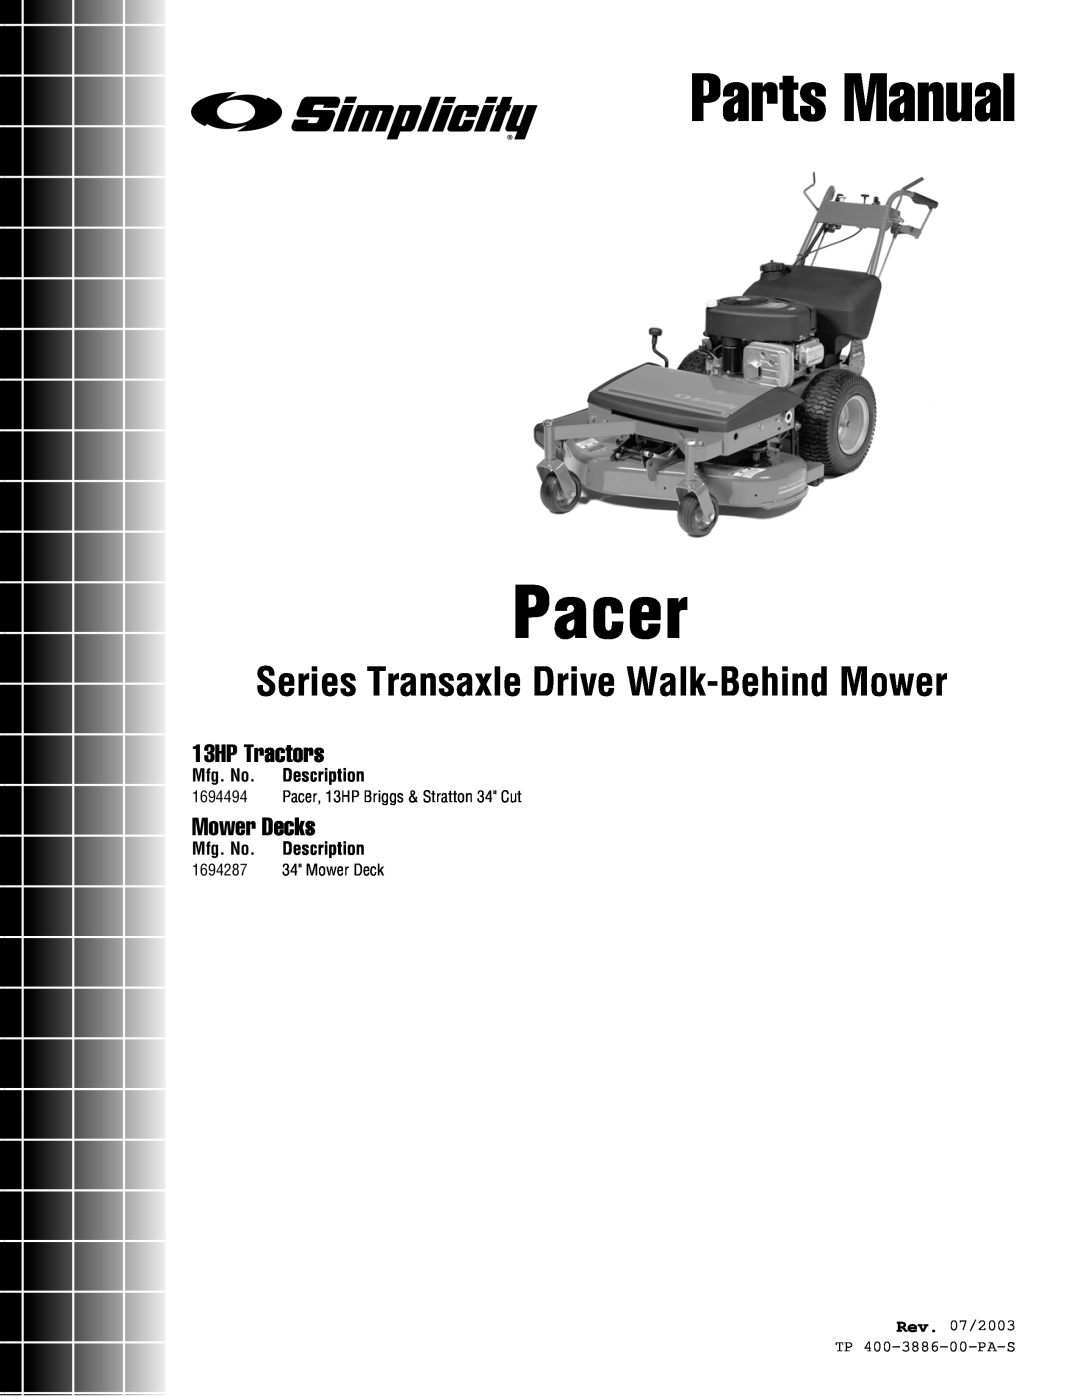 Simplicity Series Transaxle manual Mfg. No. Description, Rev. 07/2003 TP 400-3886-00-PA-S, Pacer, Parts Manual 